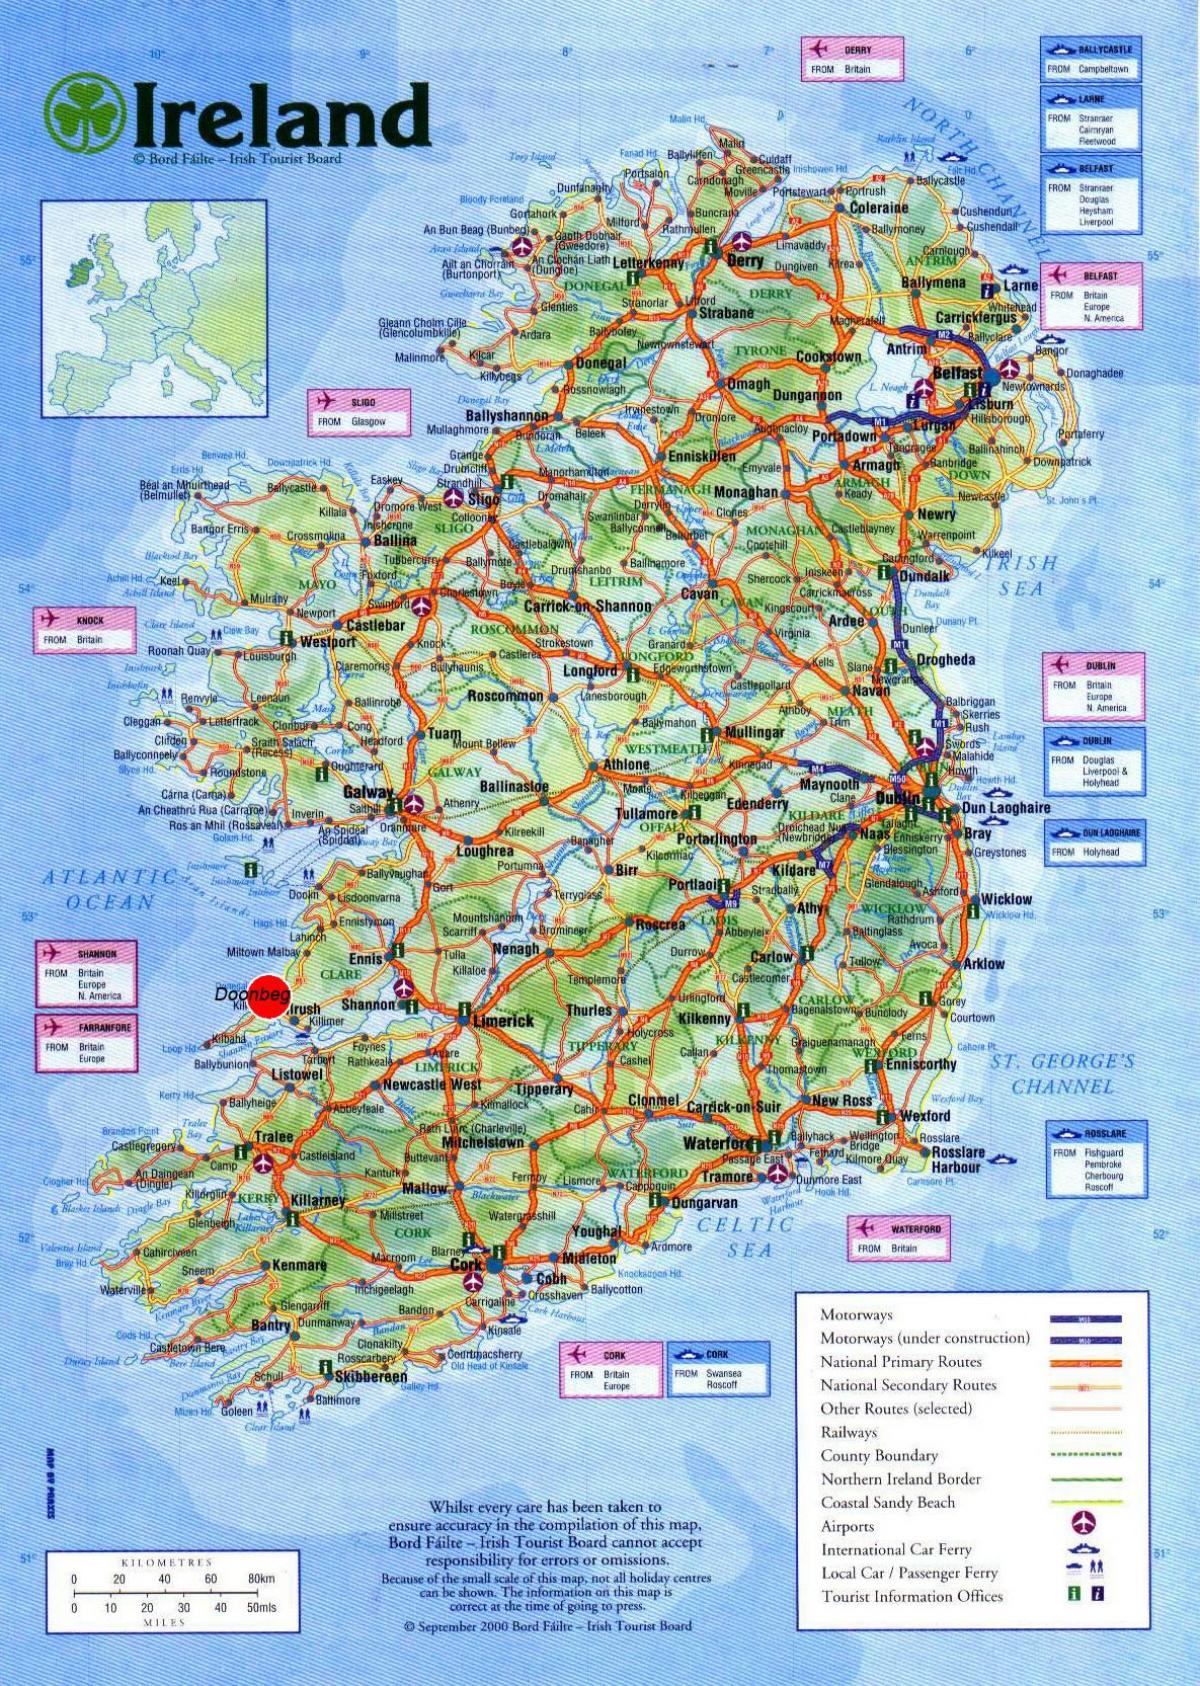 kort over irland viser turistattraktioner